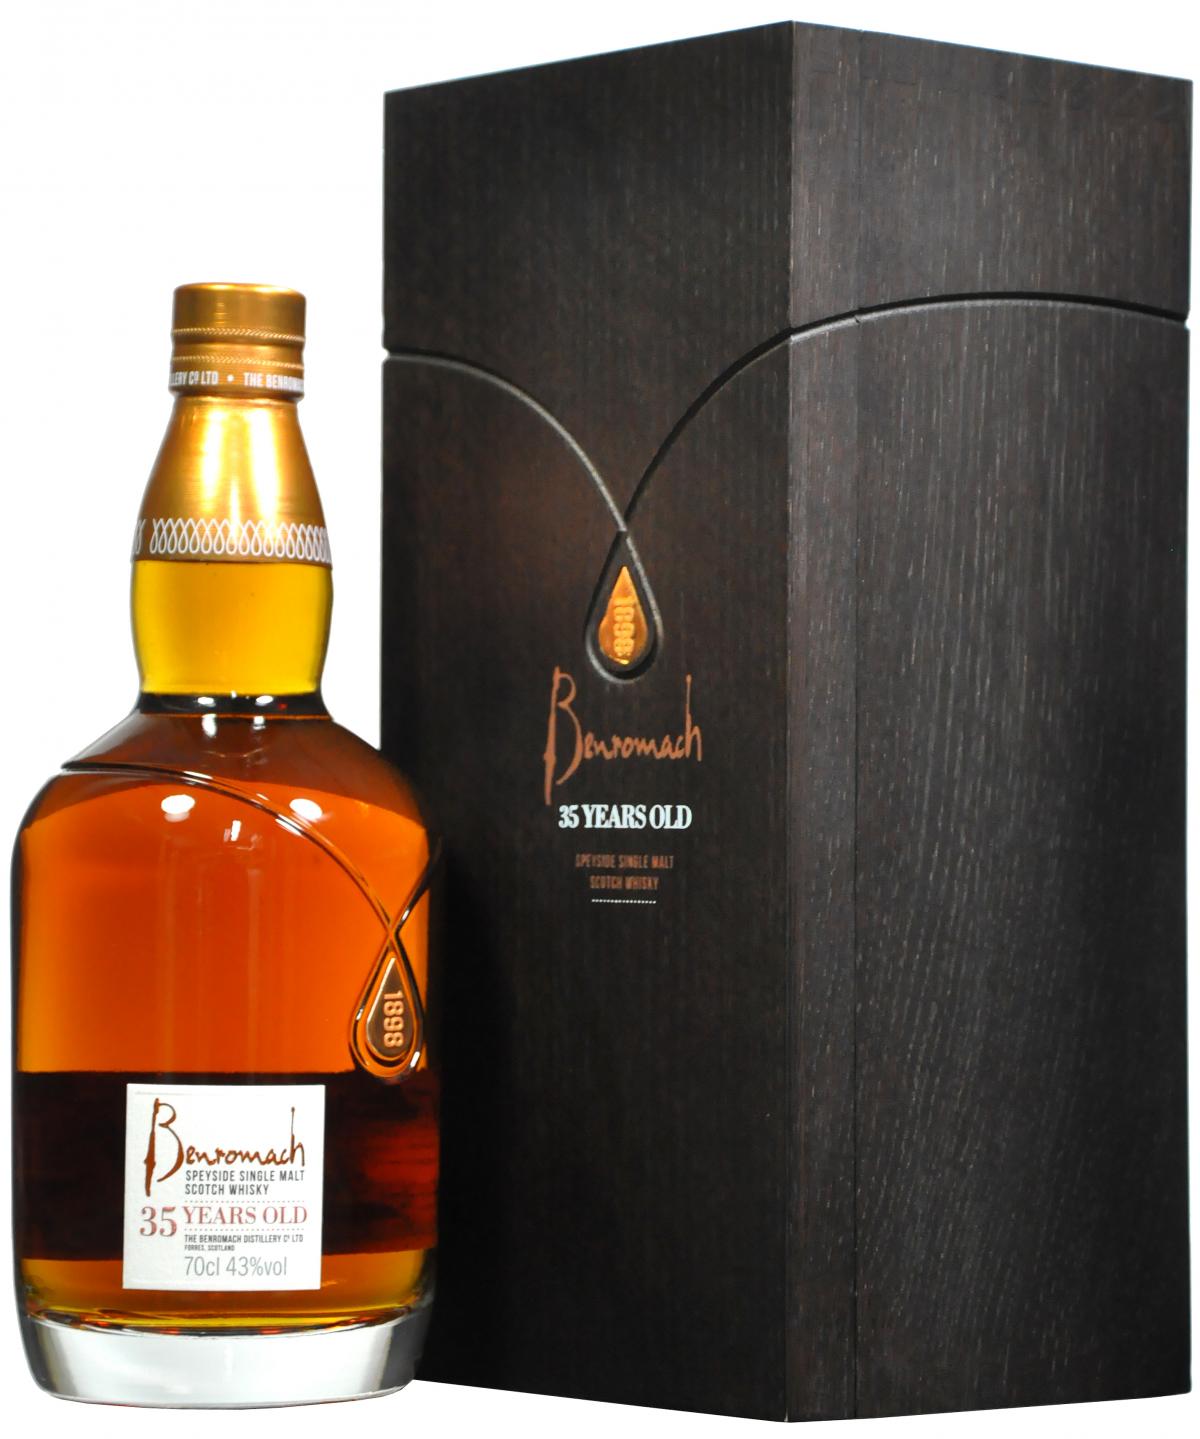 benromach 35 year old, speyside single malt scotch whisky,